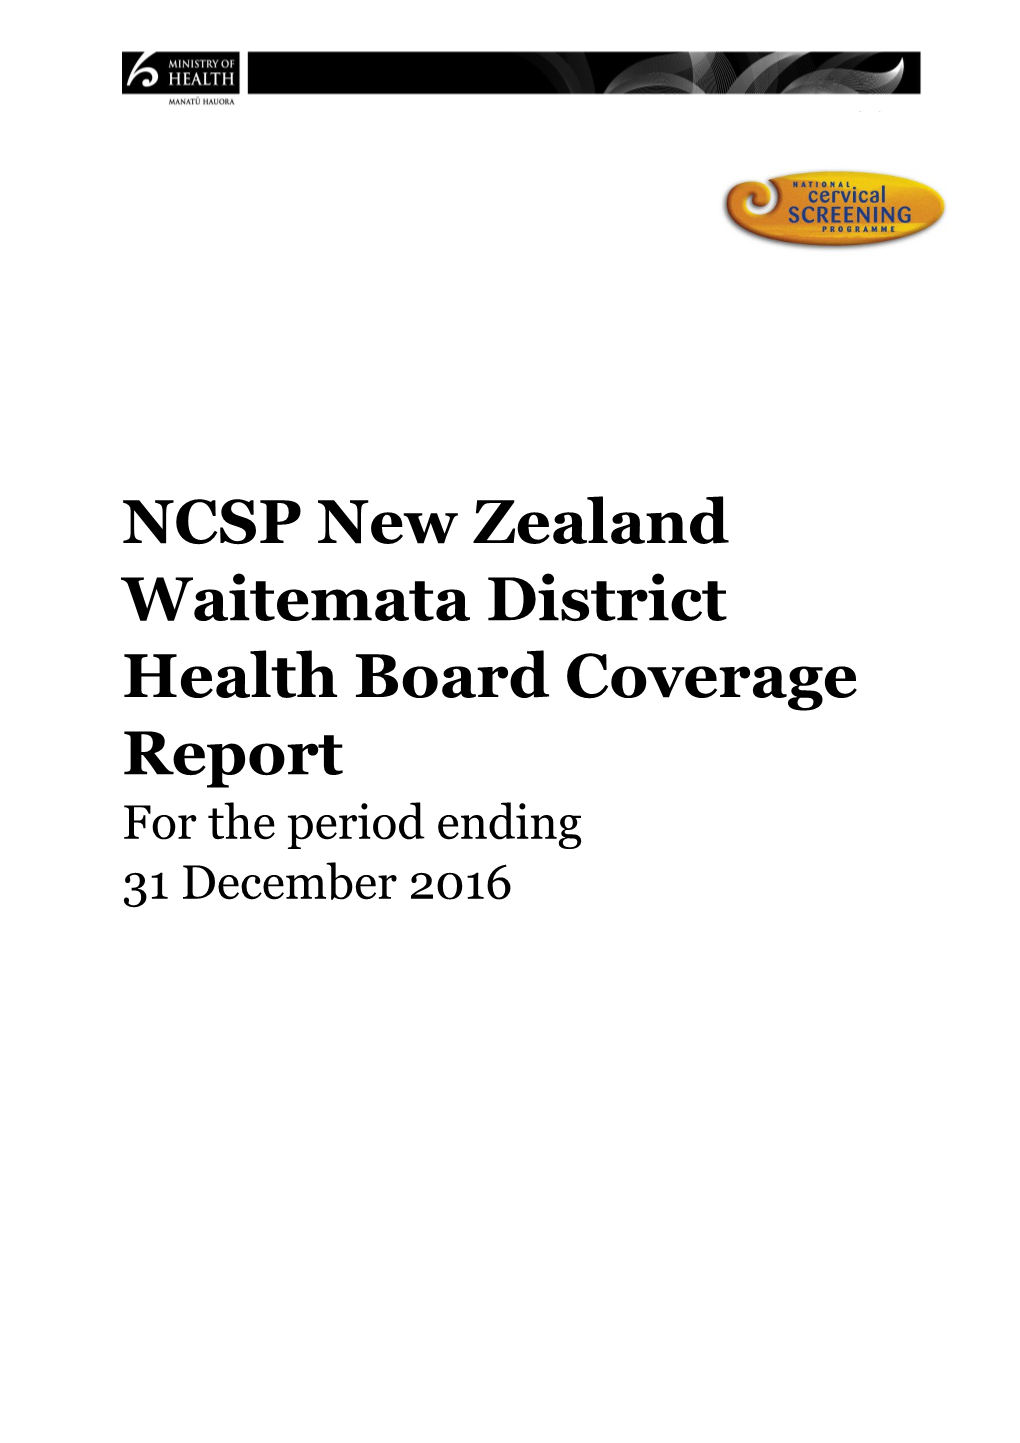 NCSP New Zealand Waitemata District Health Boardcoverage Report